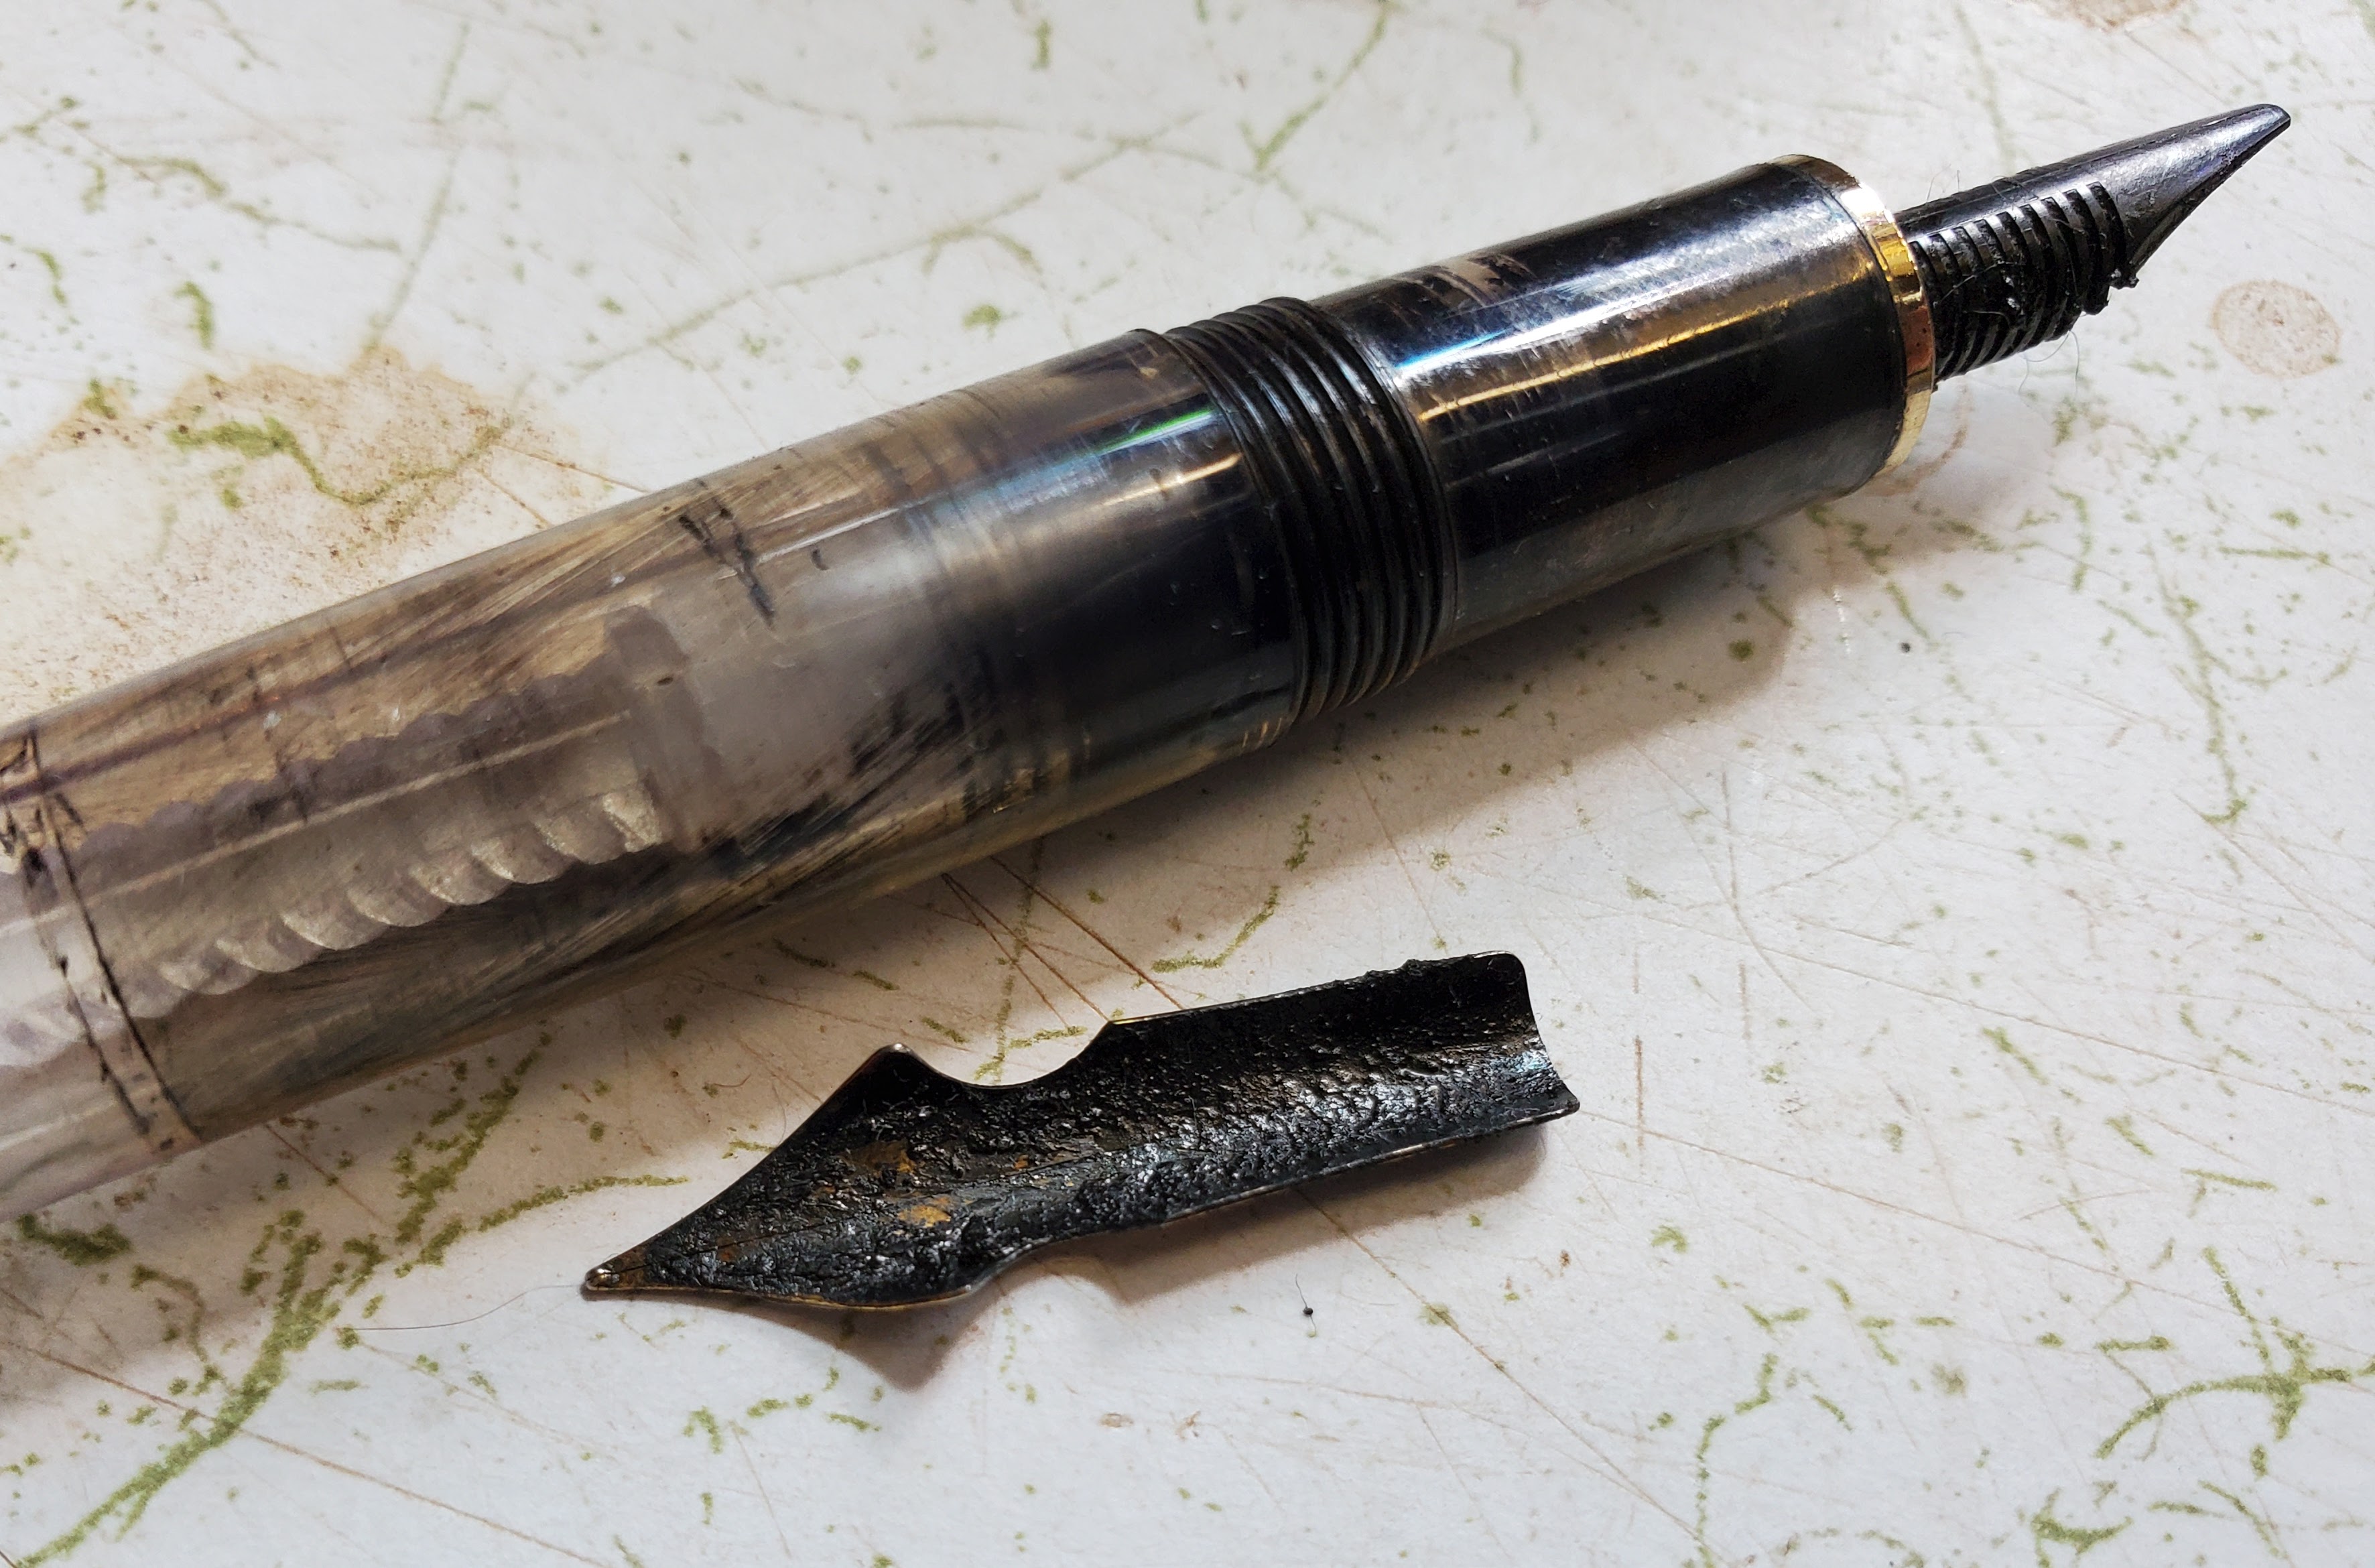 Noodler's Lexington Gray Ink with a Dip Pen  Wonder Pens - Life Behind a  Stationery Shop